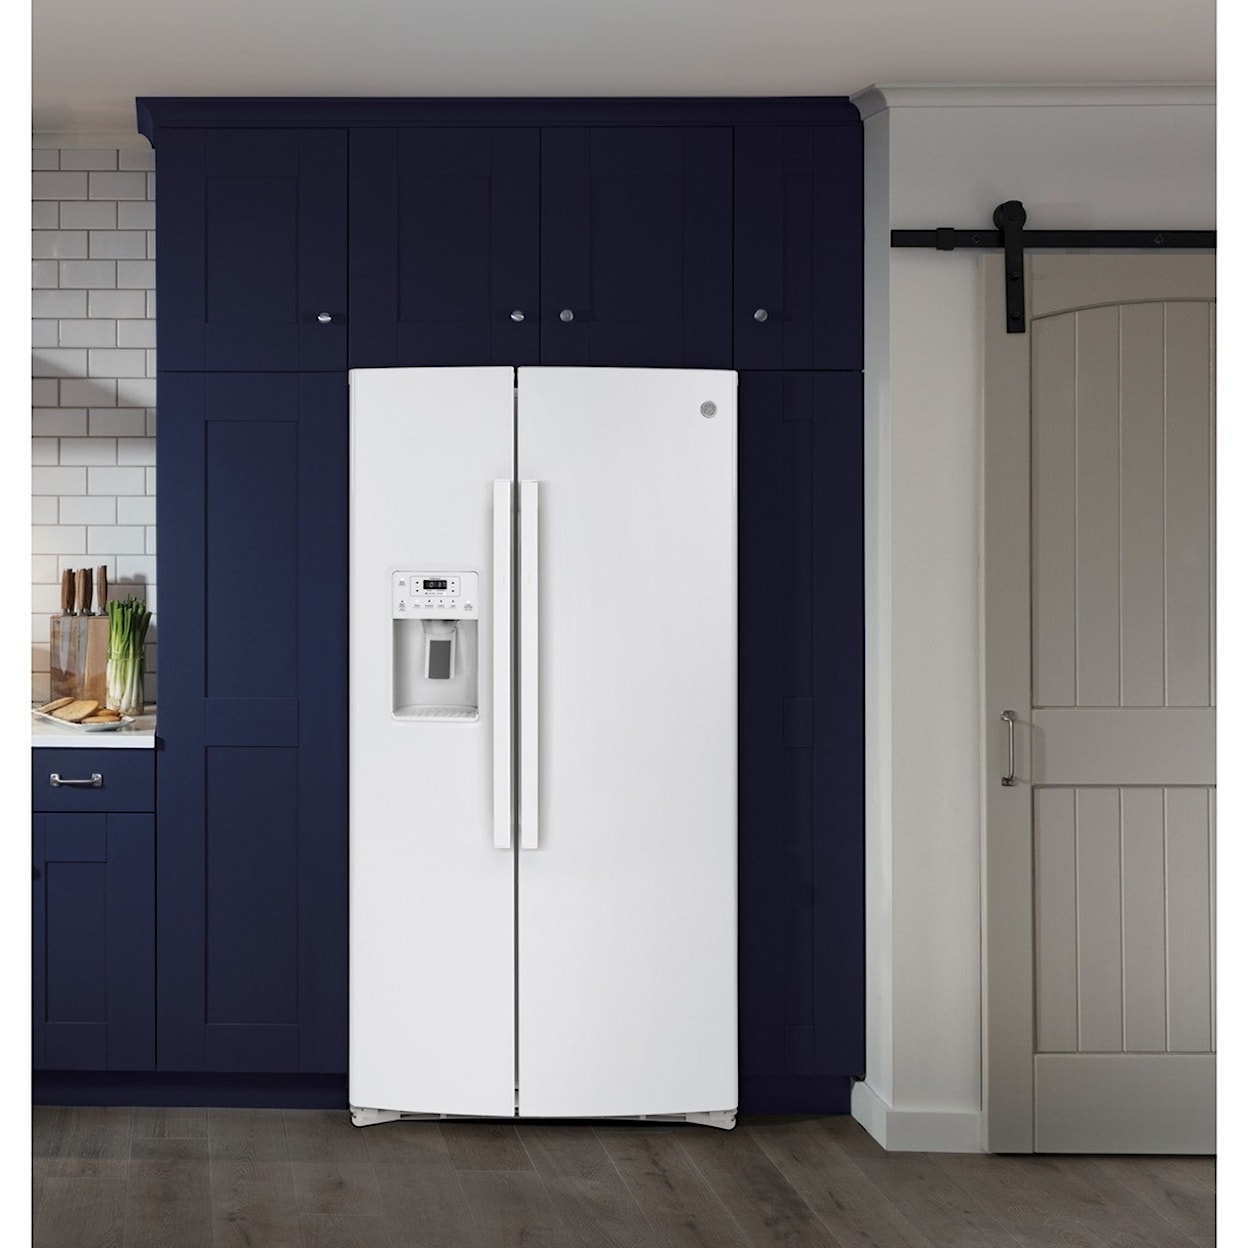 GE Appliances GE Series Side-By-Side Refrigerators GE® 25.1 Cu. Ft. Side-By-Side Refrigerator